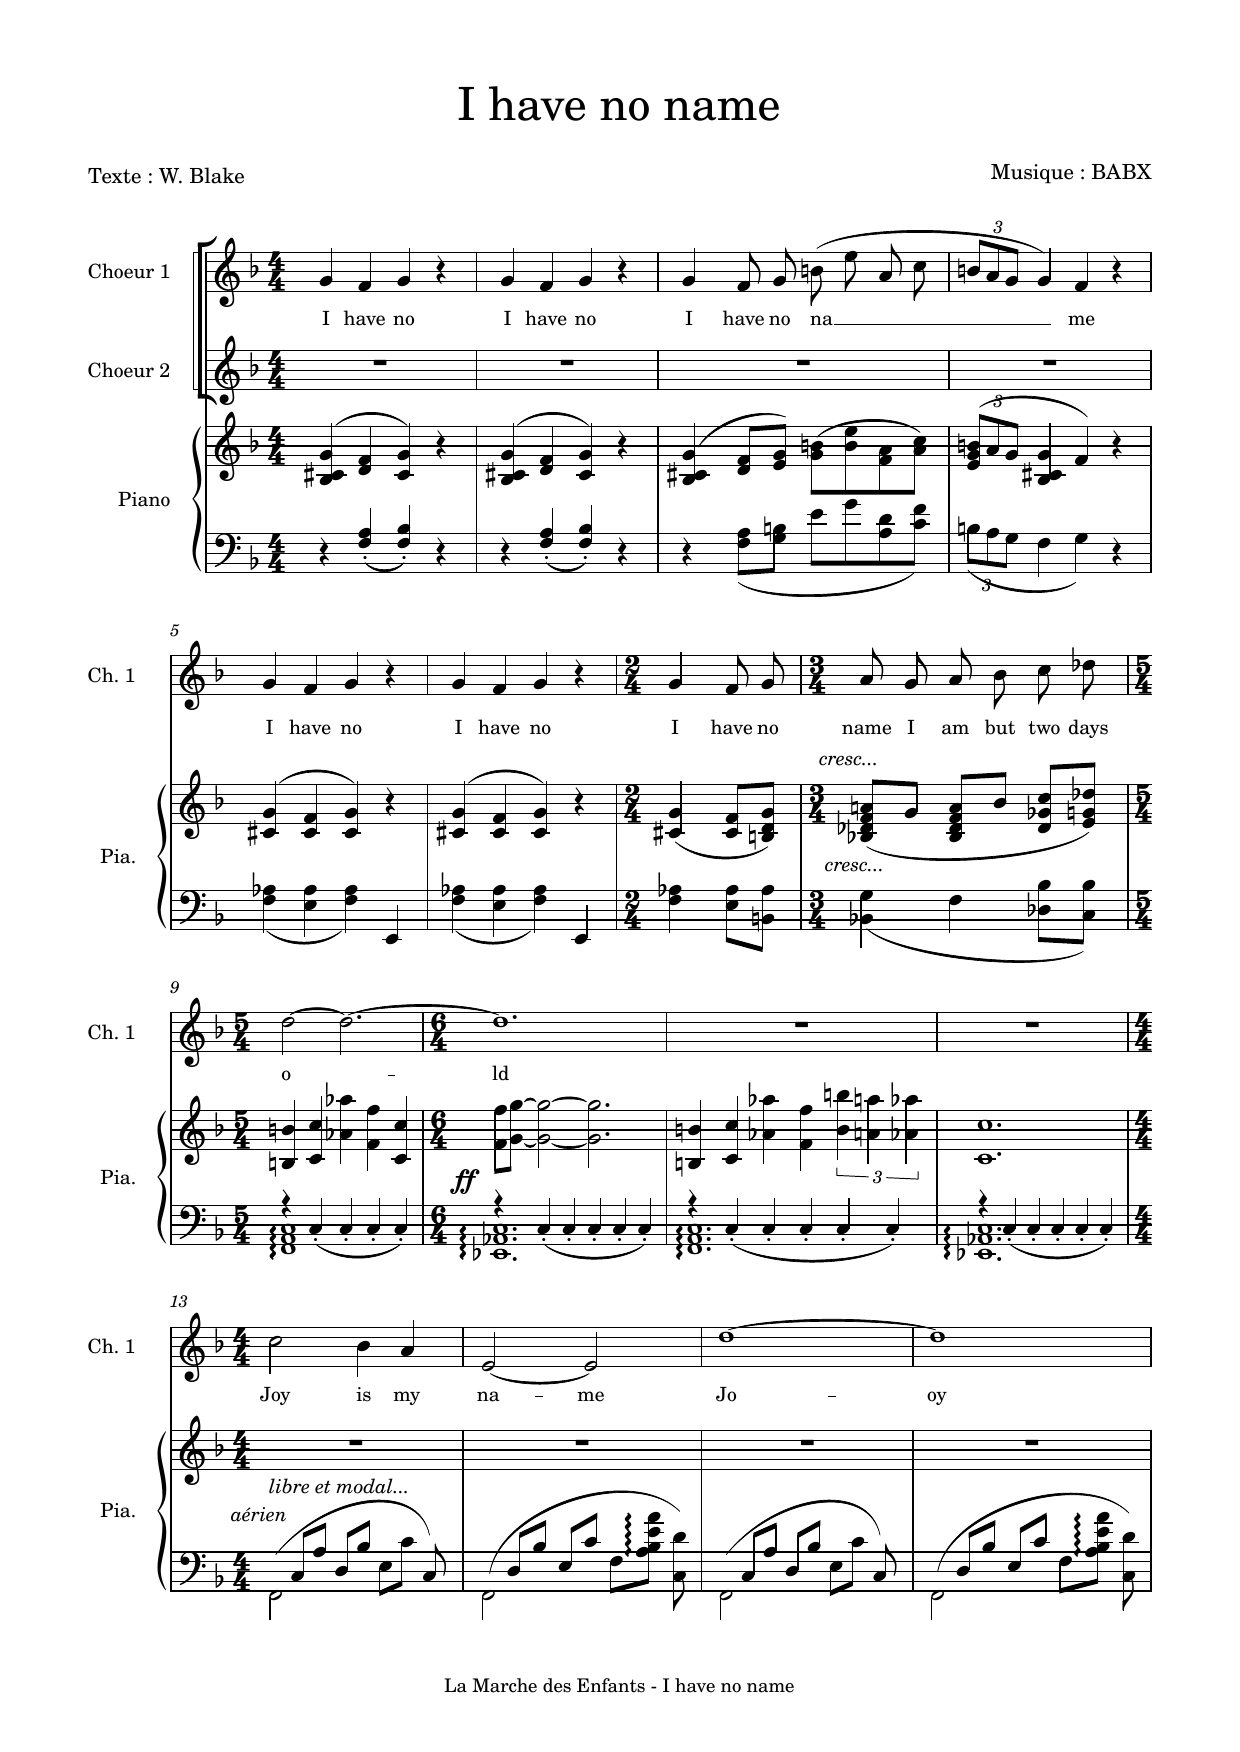 David Babin (Babx) I have no name Sheet Music Notes & Chords for Choir - Download or Print PDF